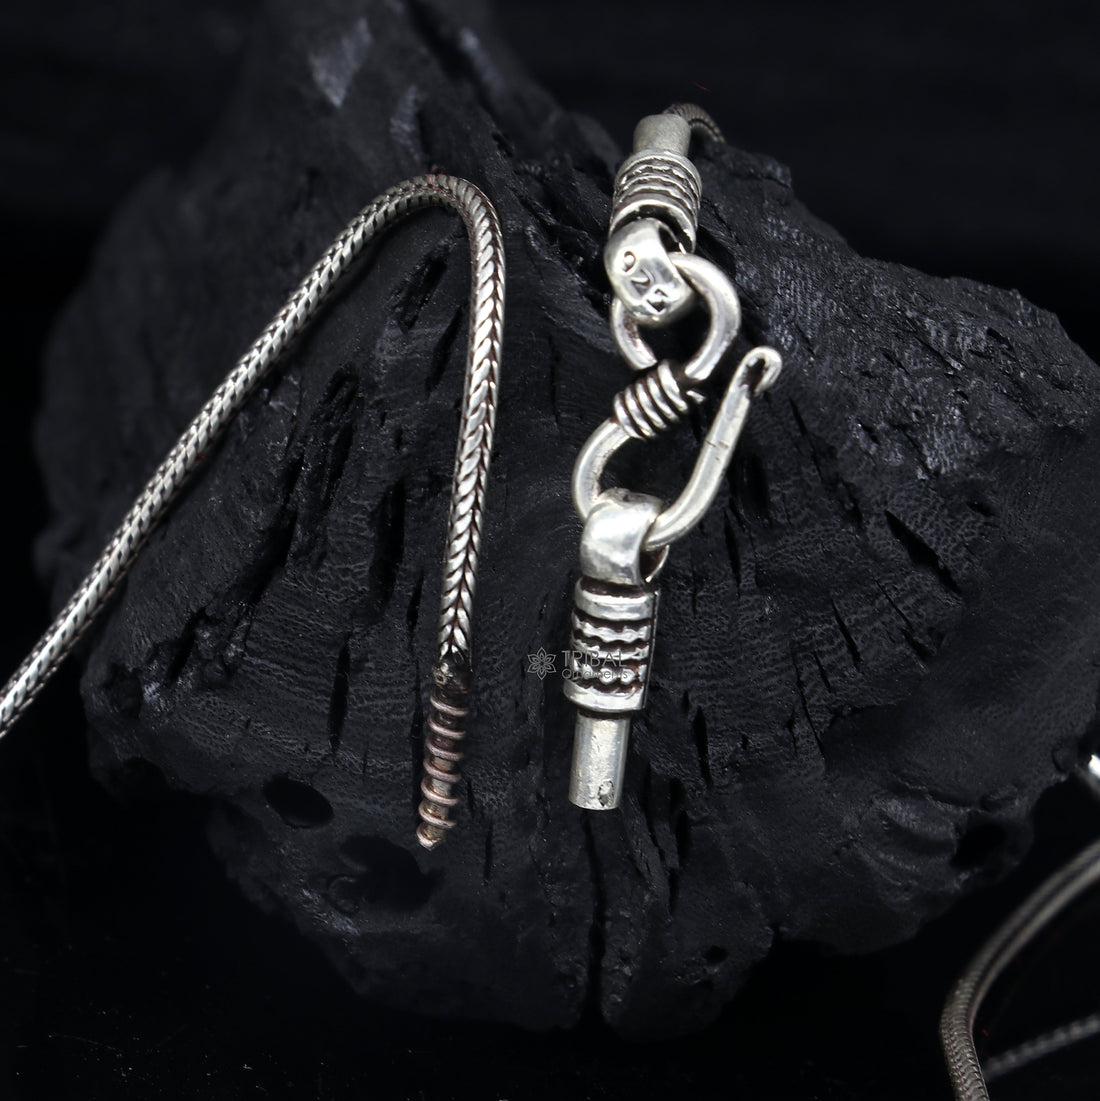 Buy Kali Pendant Indian Hindu Goddess German Silver Necklace Mahakali  Silver Chain Oxidized Spiritual Jewelry Religious Gift Ideas Kali Jewelry  Online in India 